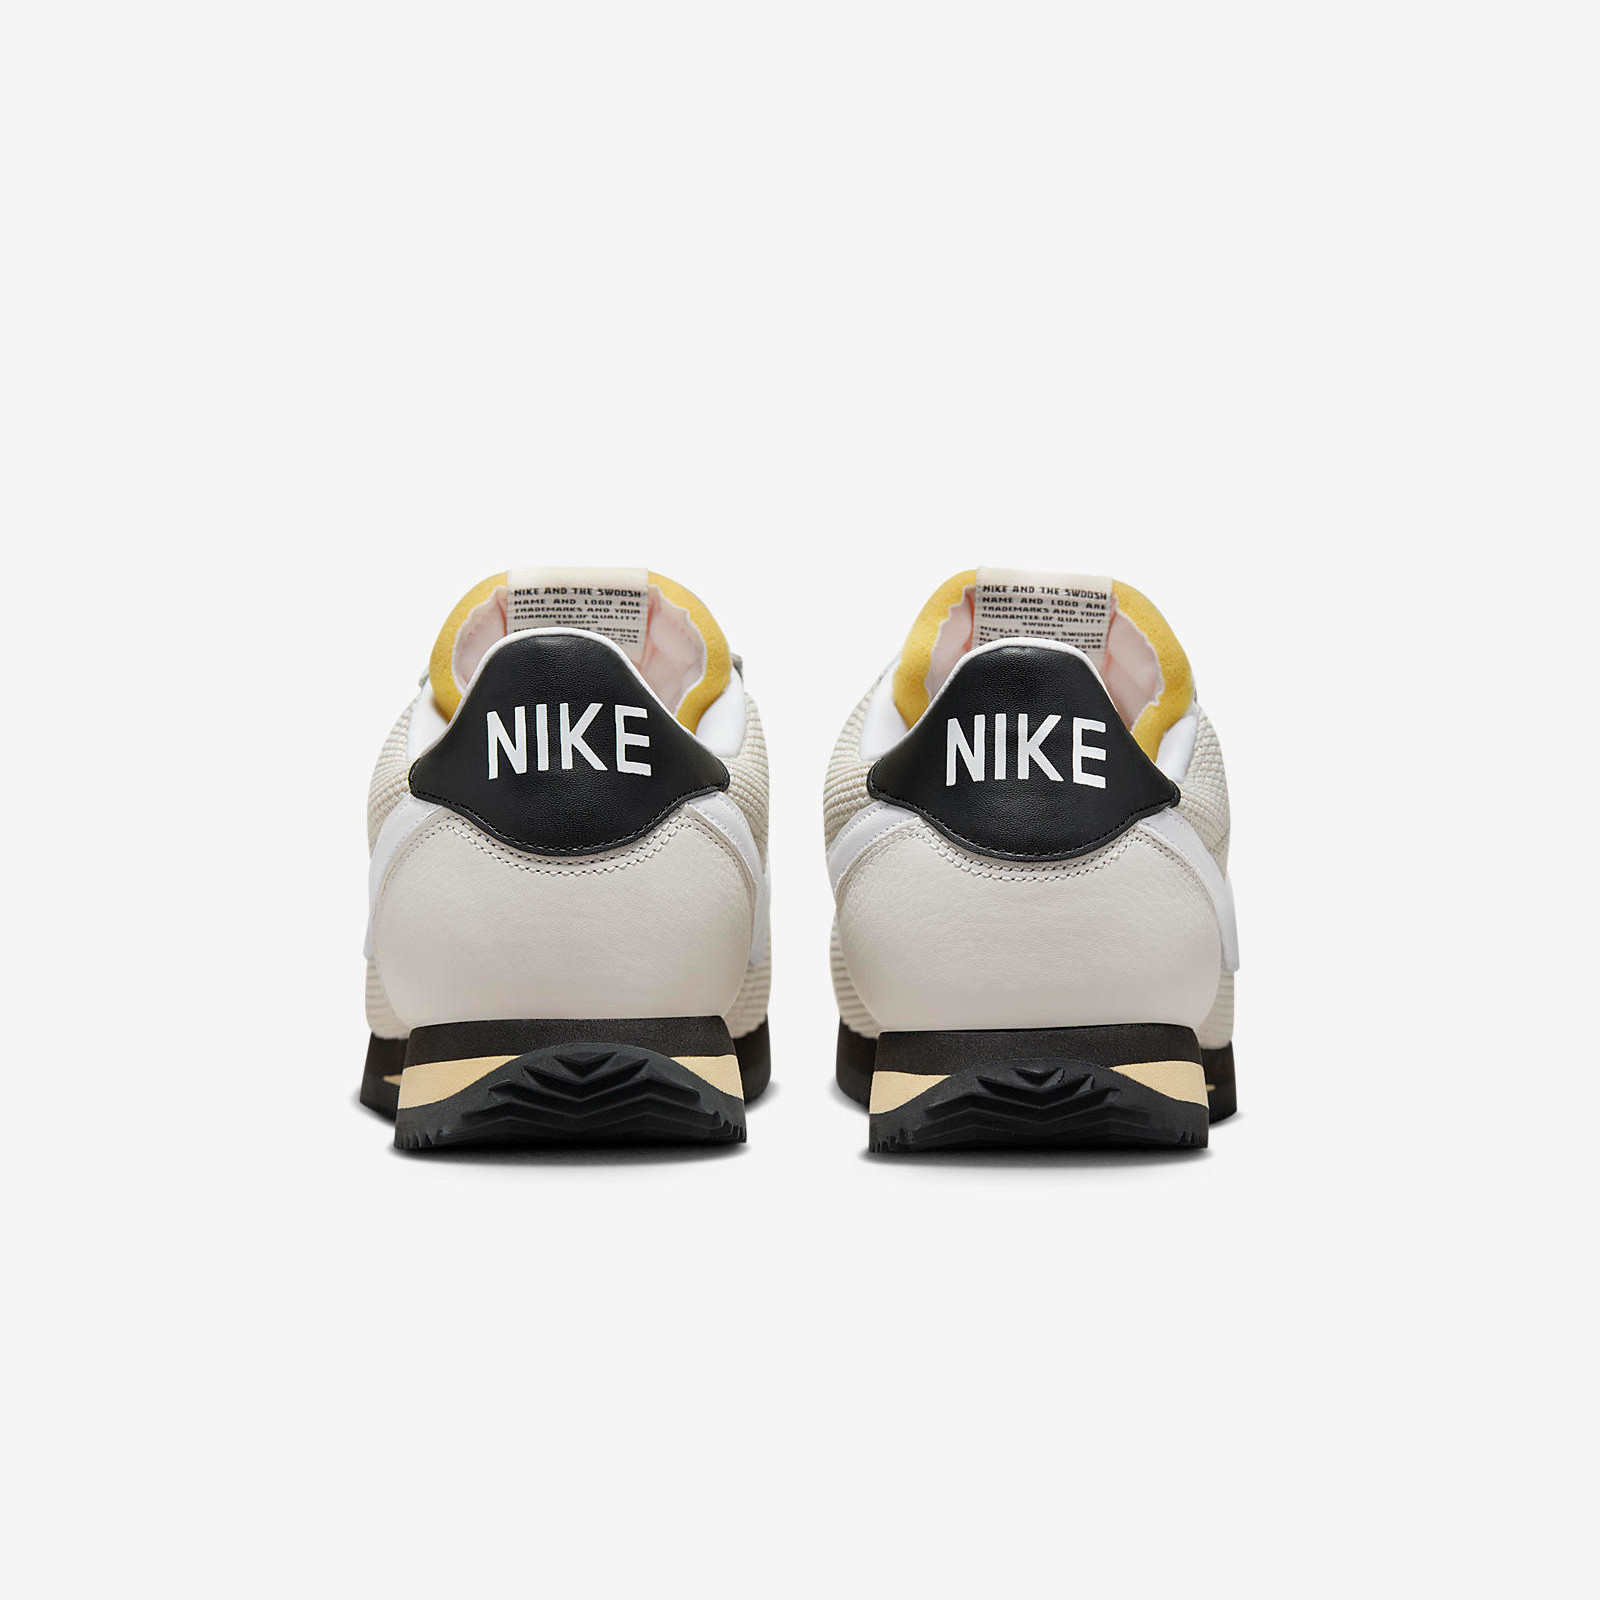 Nike Cortez
« Light Orewood Brown »